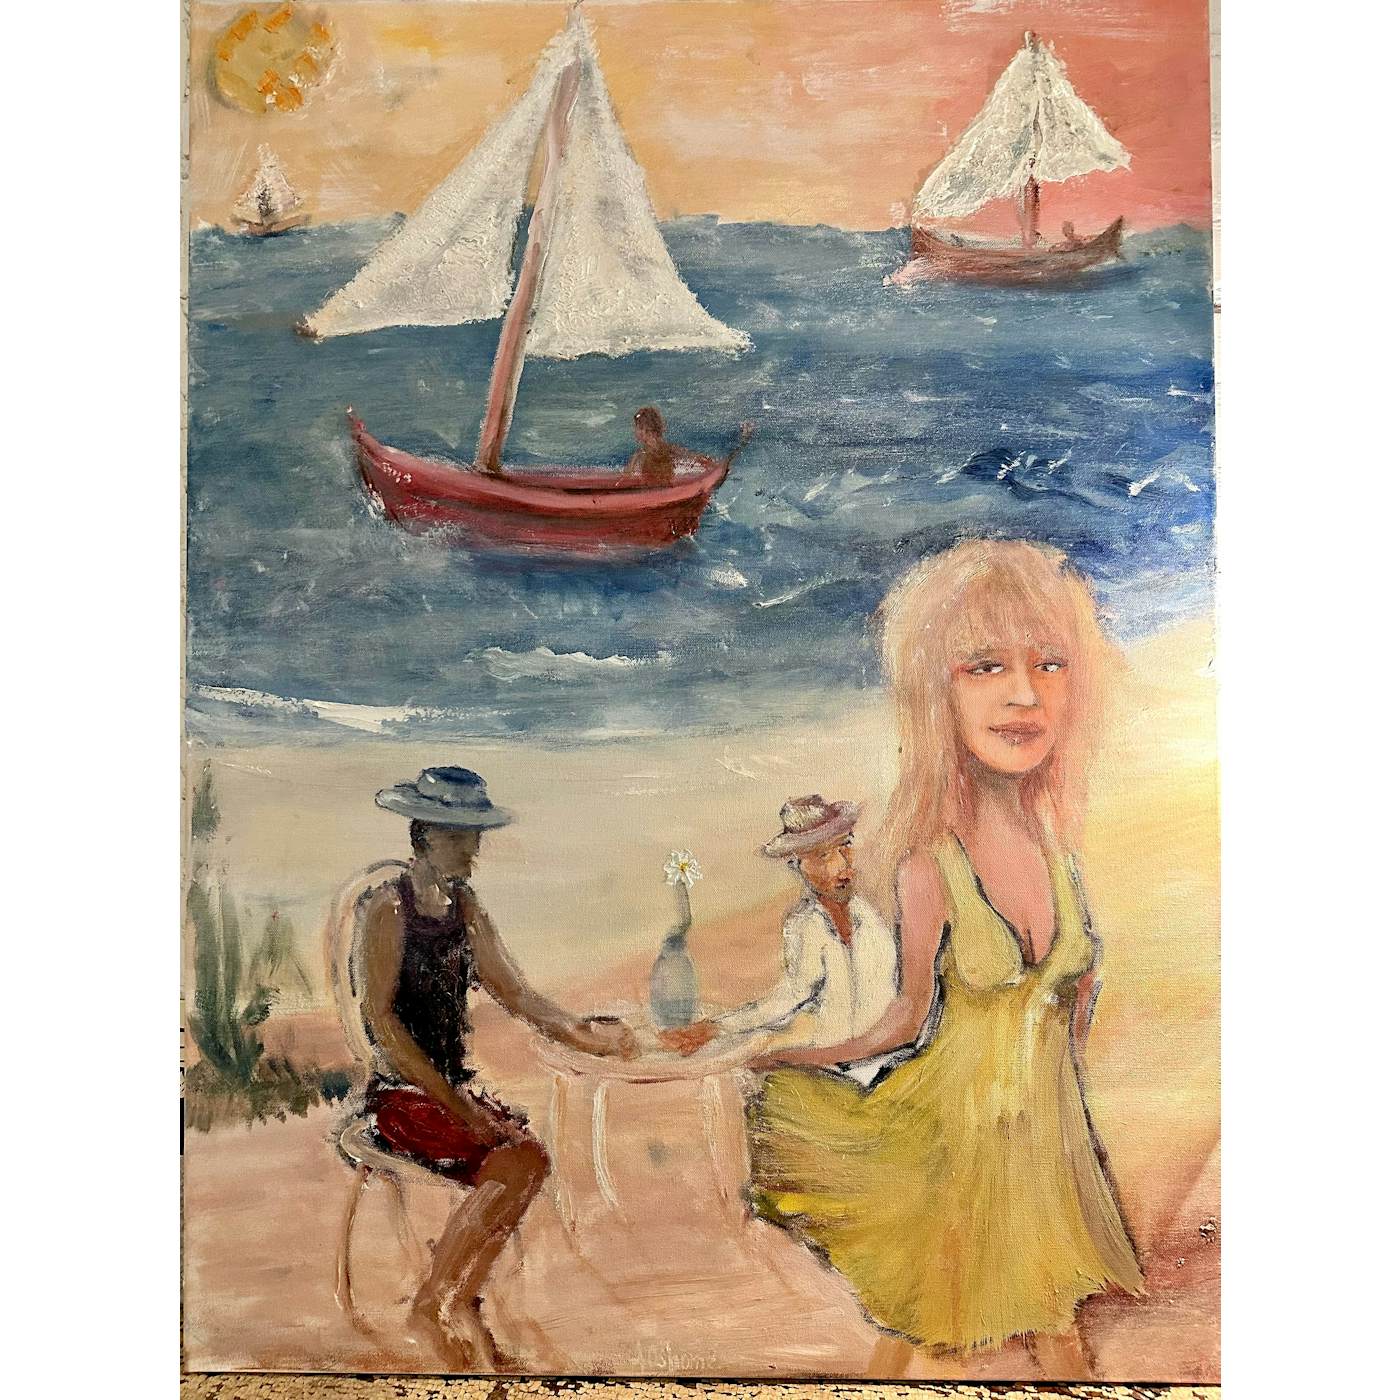 Anders Osborne "Sail Away" - Oil on Canvas